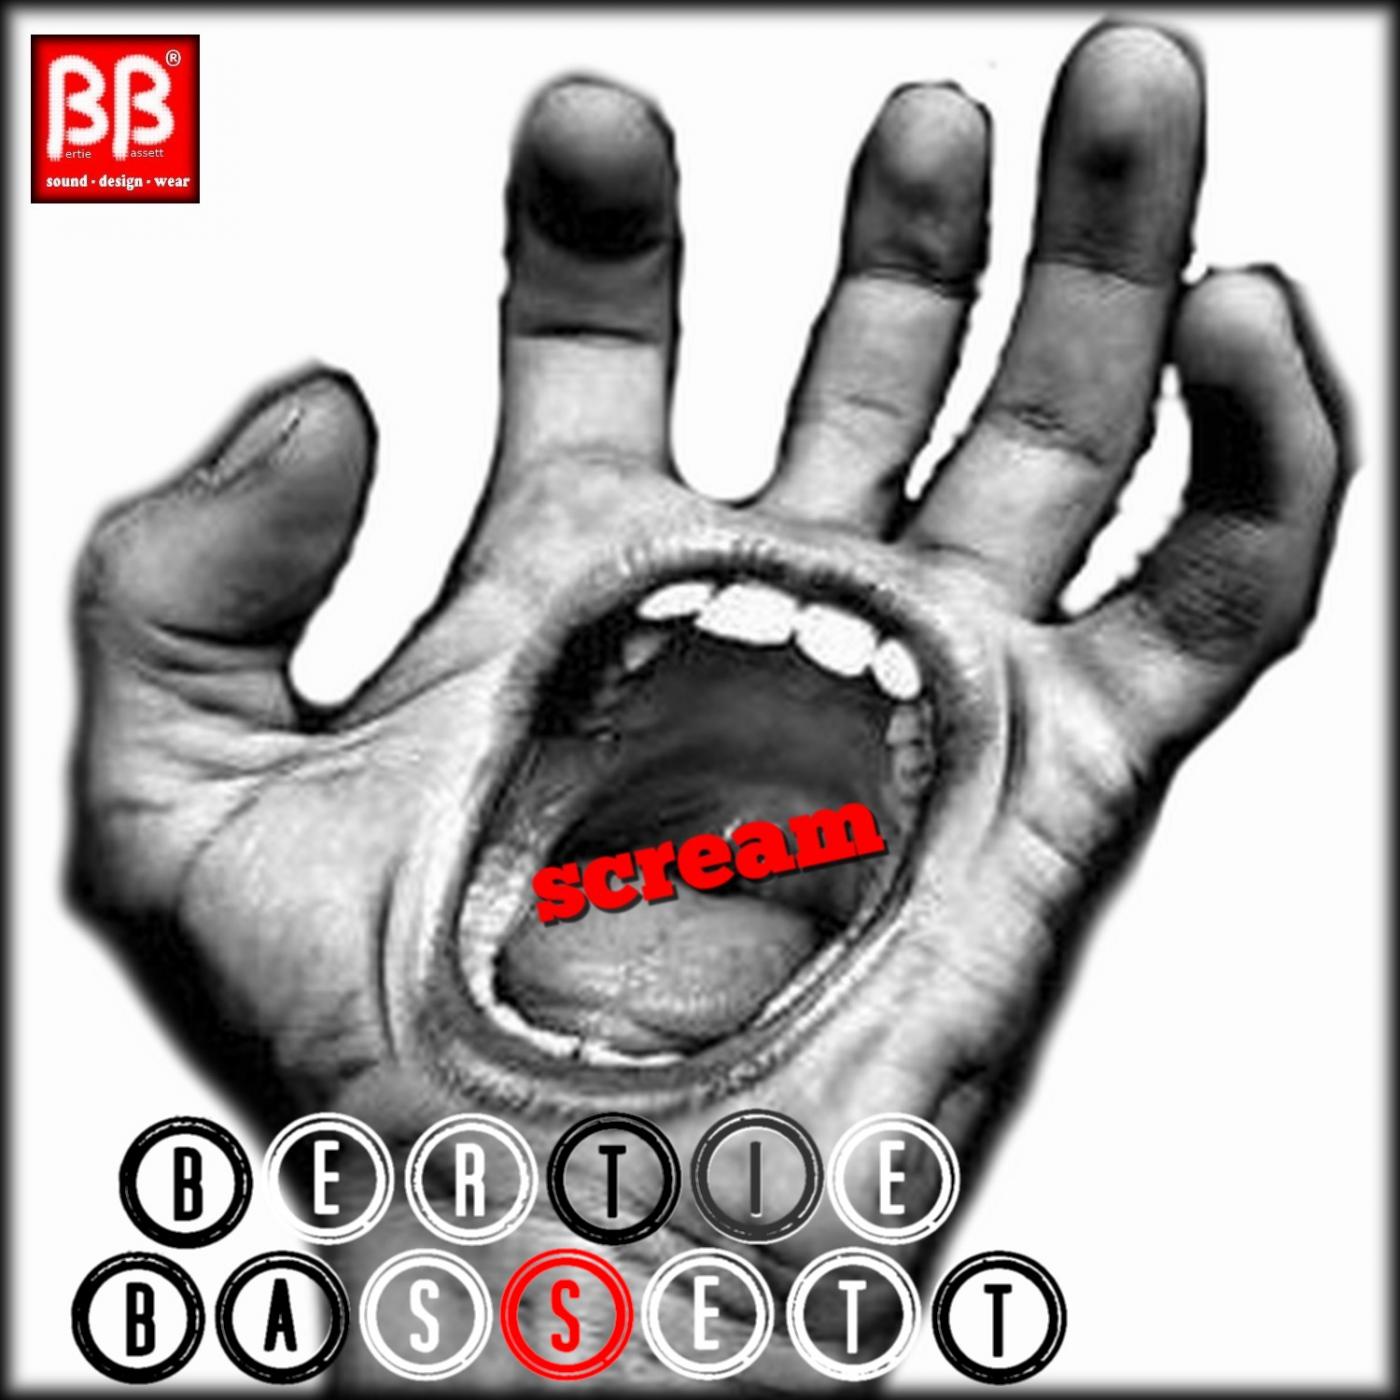 bertie bassett - Scream (Nic Capadocia Remix)